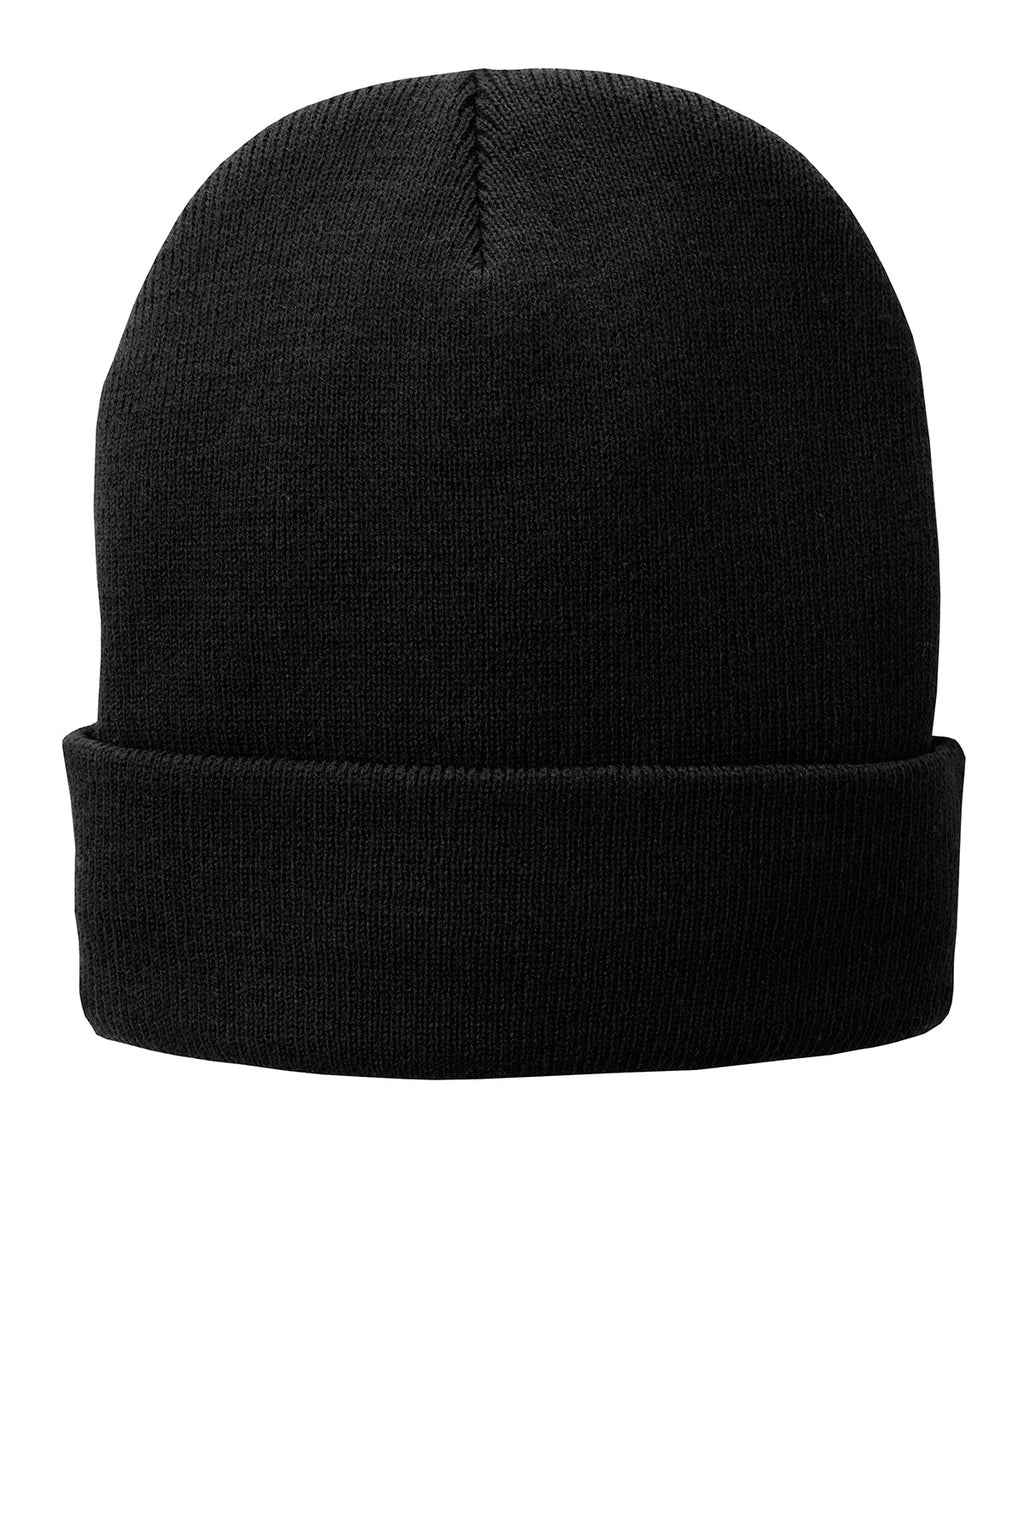 Port & Company® Fleece-Lined Black Knit Cap